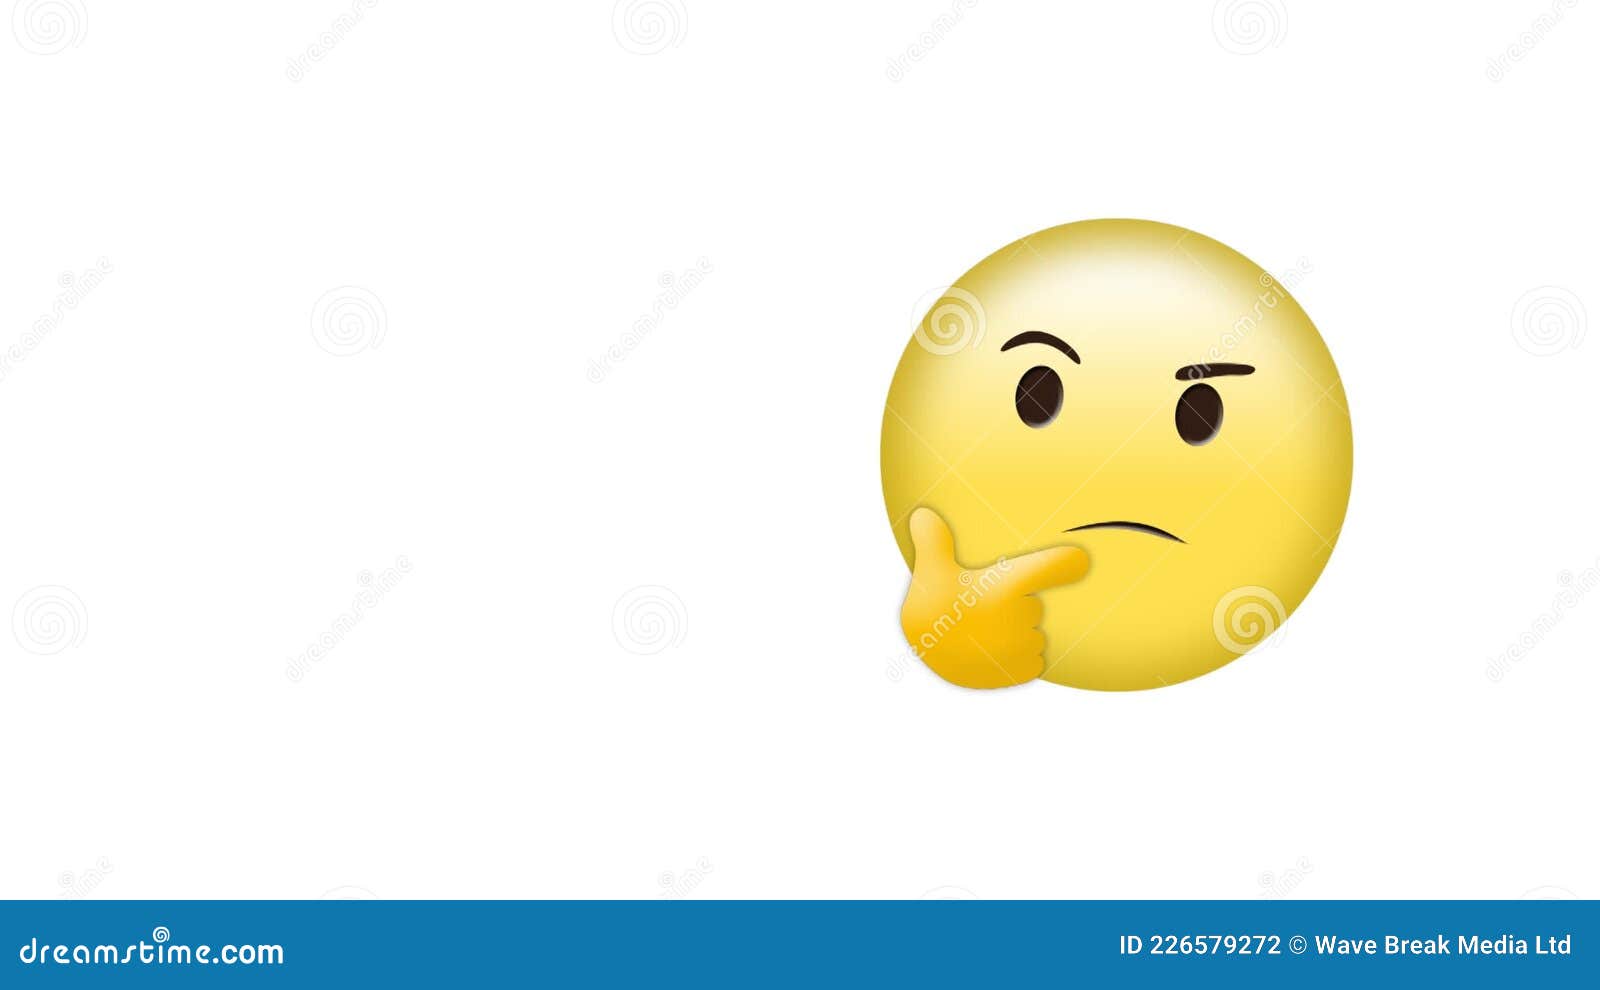 Animation Thinking Emoji Icon Play Screen Disturbance Global